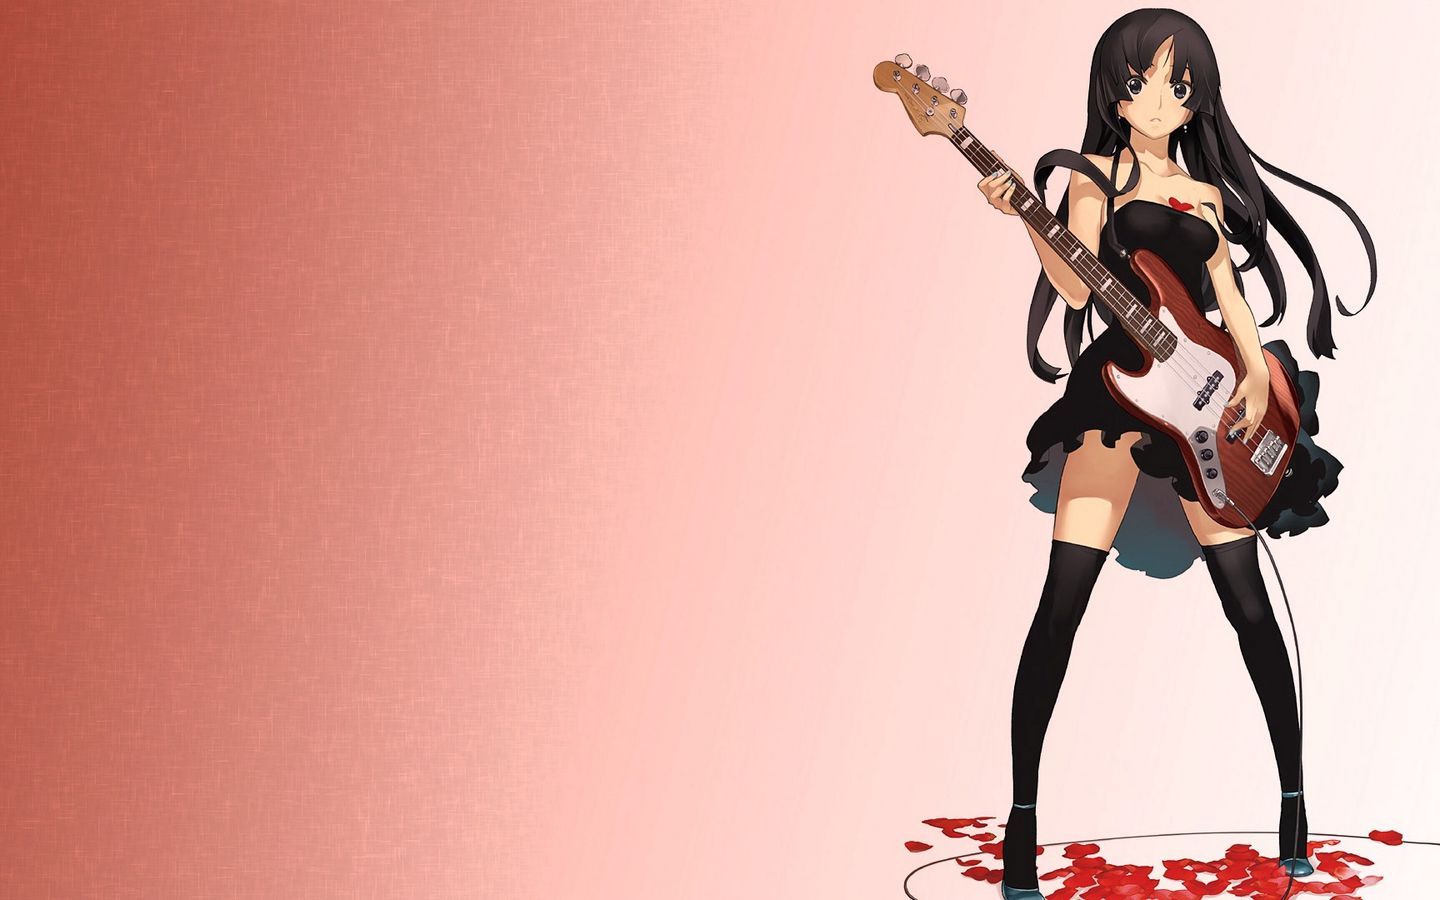 Download wallpaper 1440x900 girl, anime, guitar, musician, rock